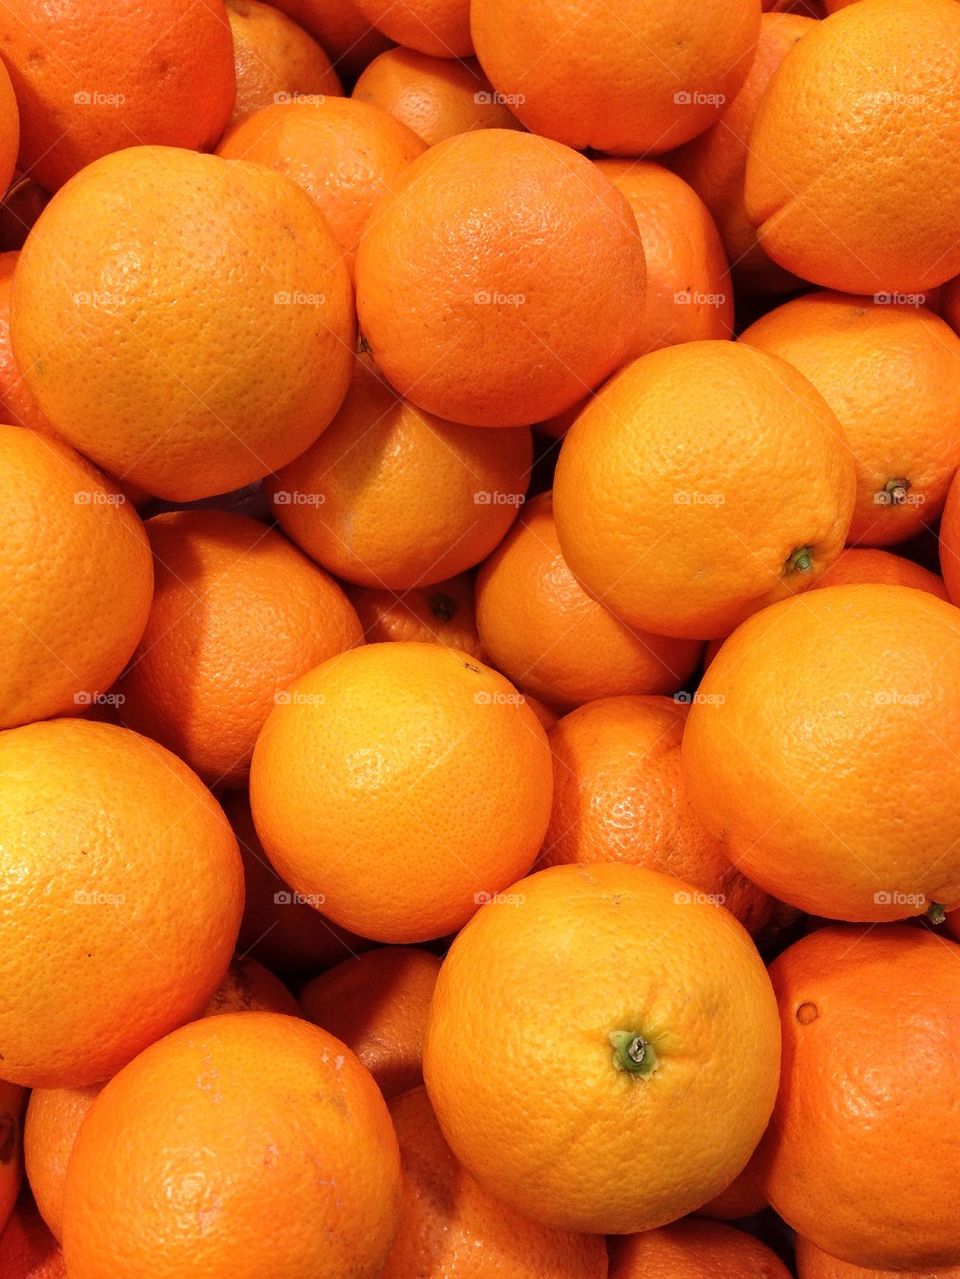 Oranges fruit in market